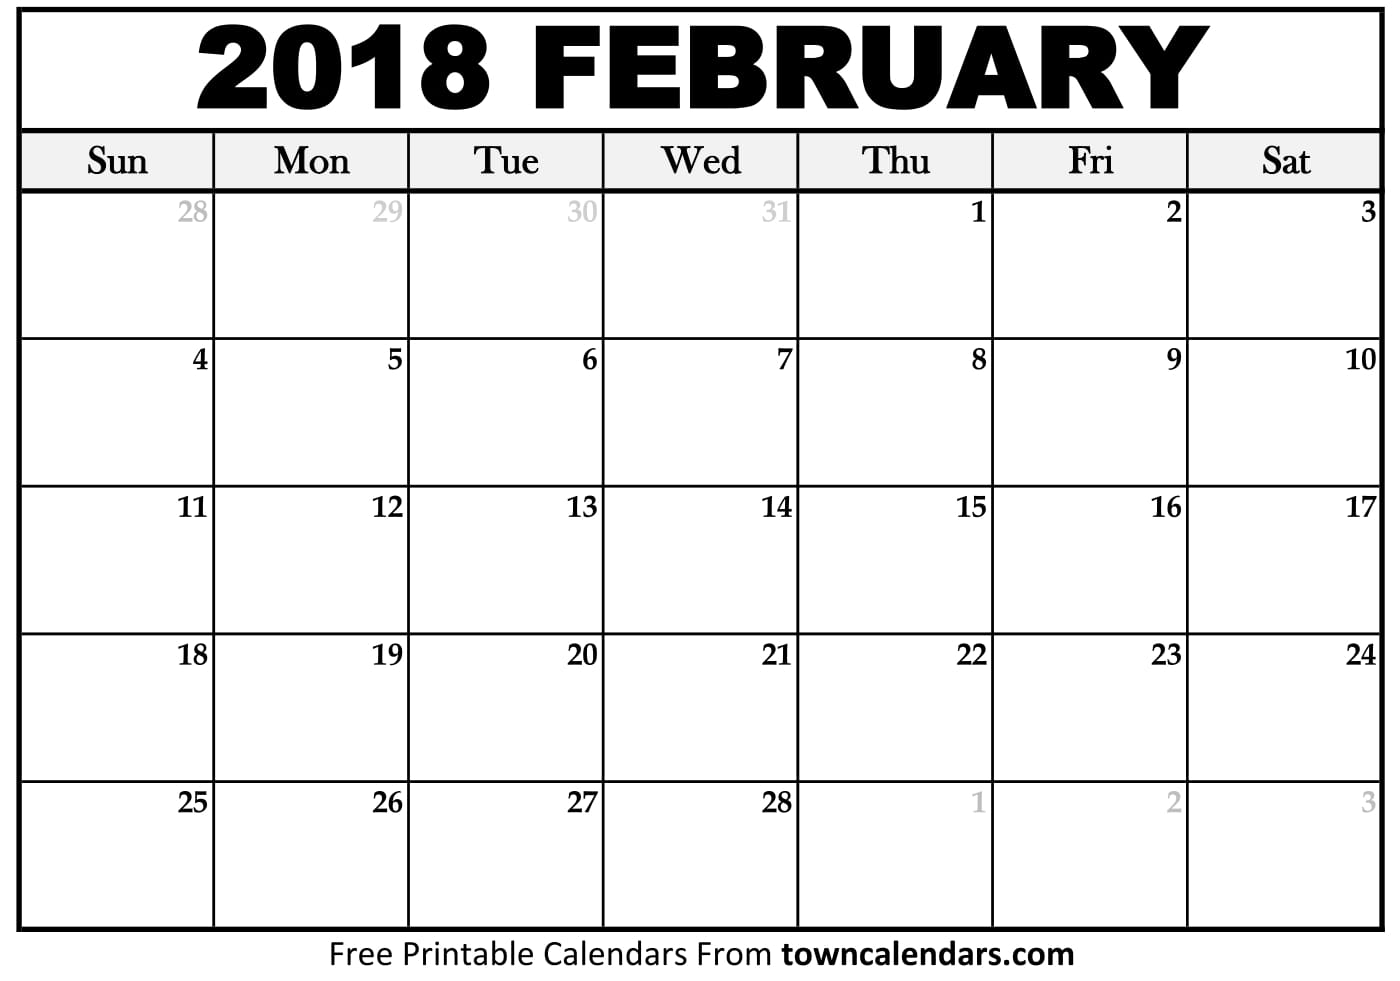 printable-february-2018-calendar-towncalendars